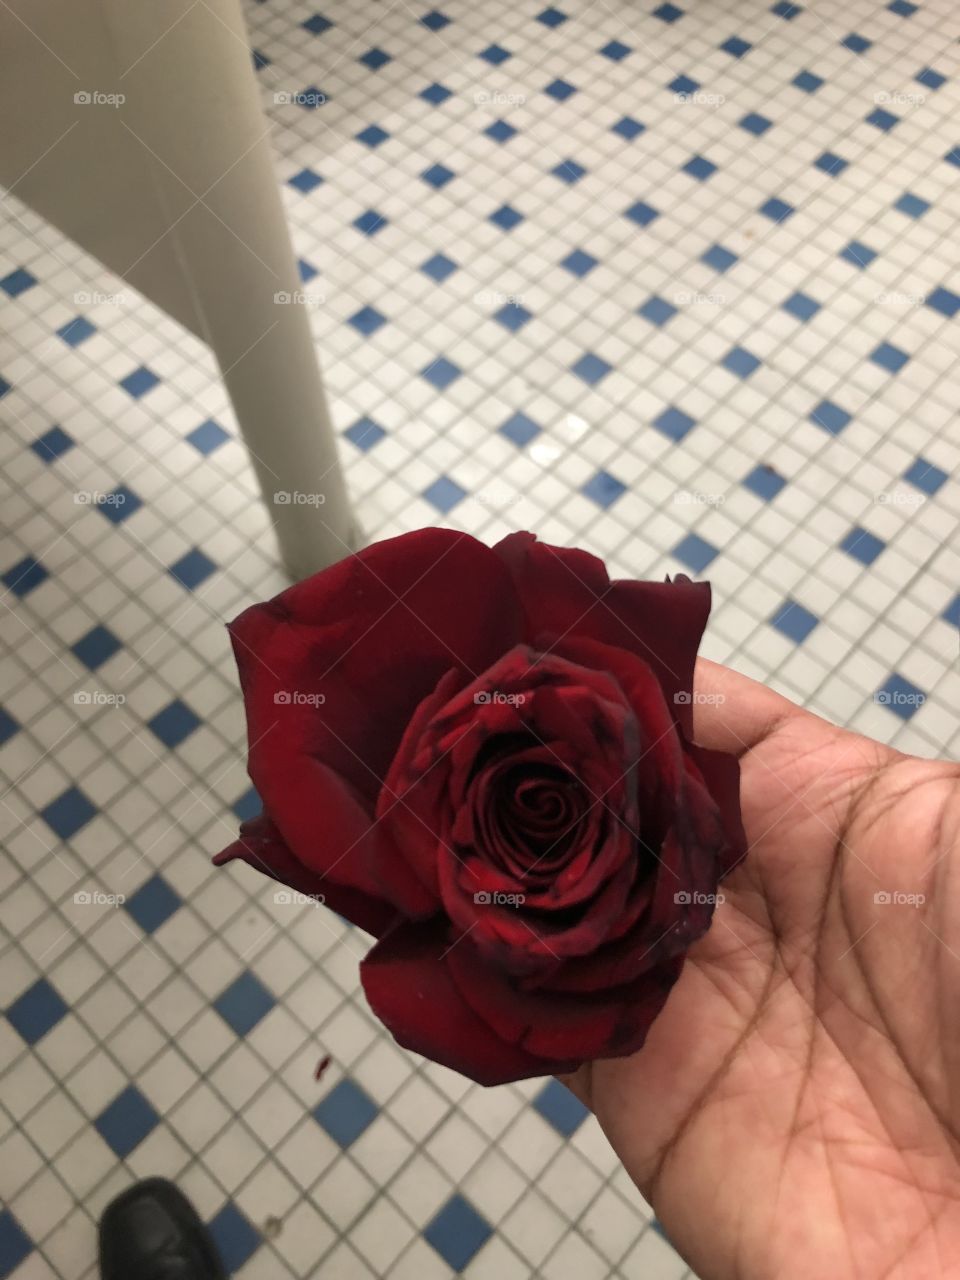 Rose nice